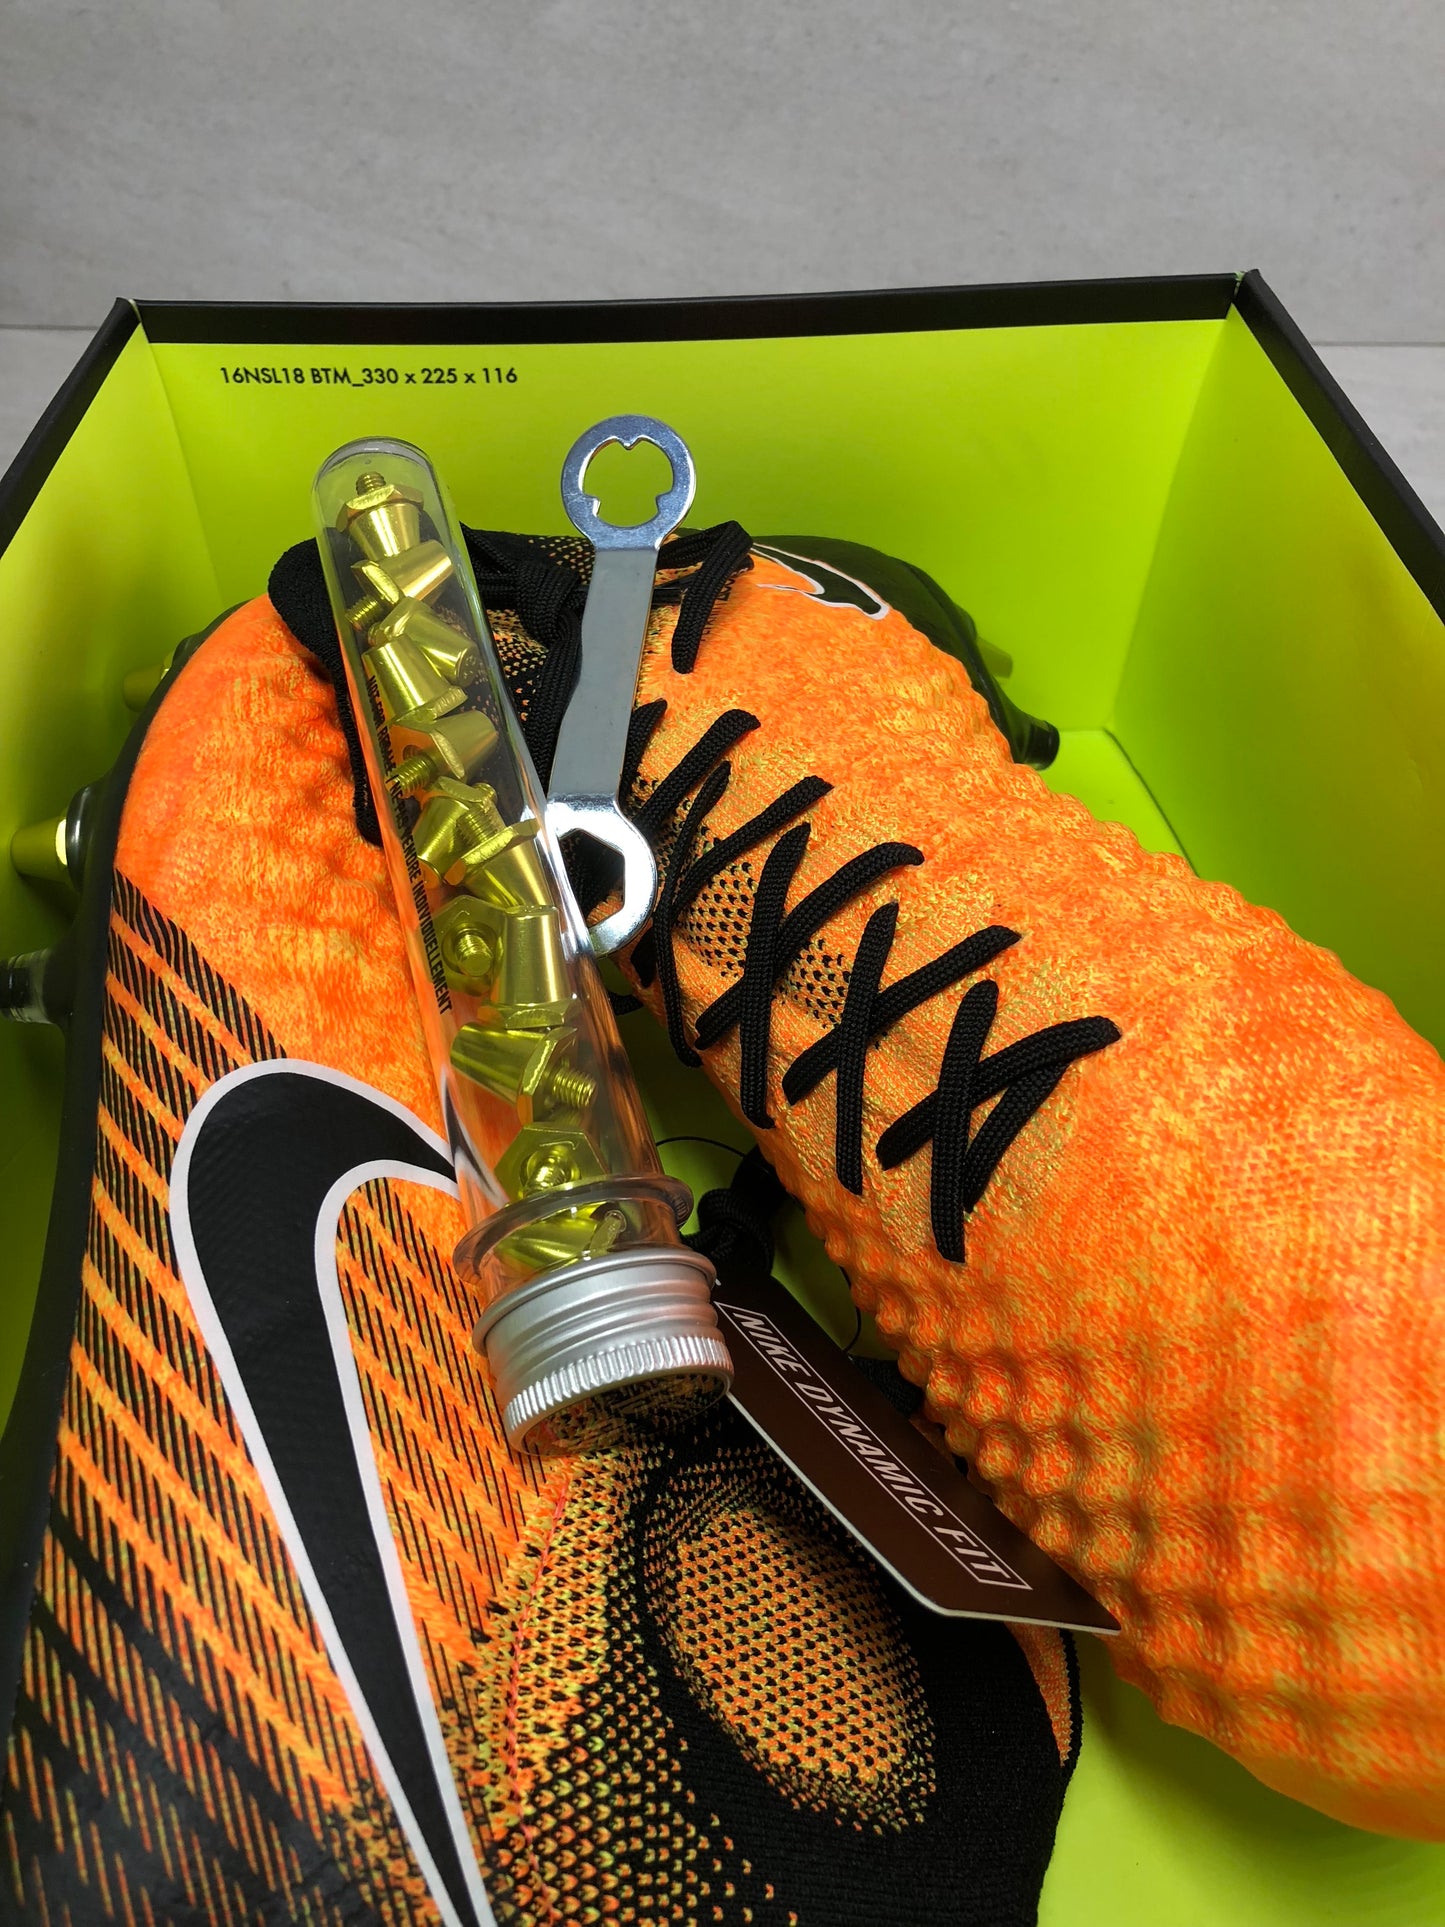 Nike Magista Obra II SG Pro - 869482 802 - Chaussures de football pour homme Taille 8/Taille 9 Laser Orange Noir Blanc